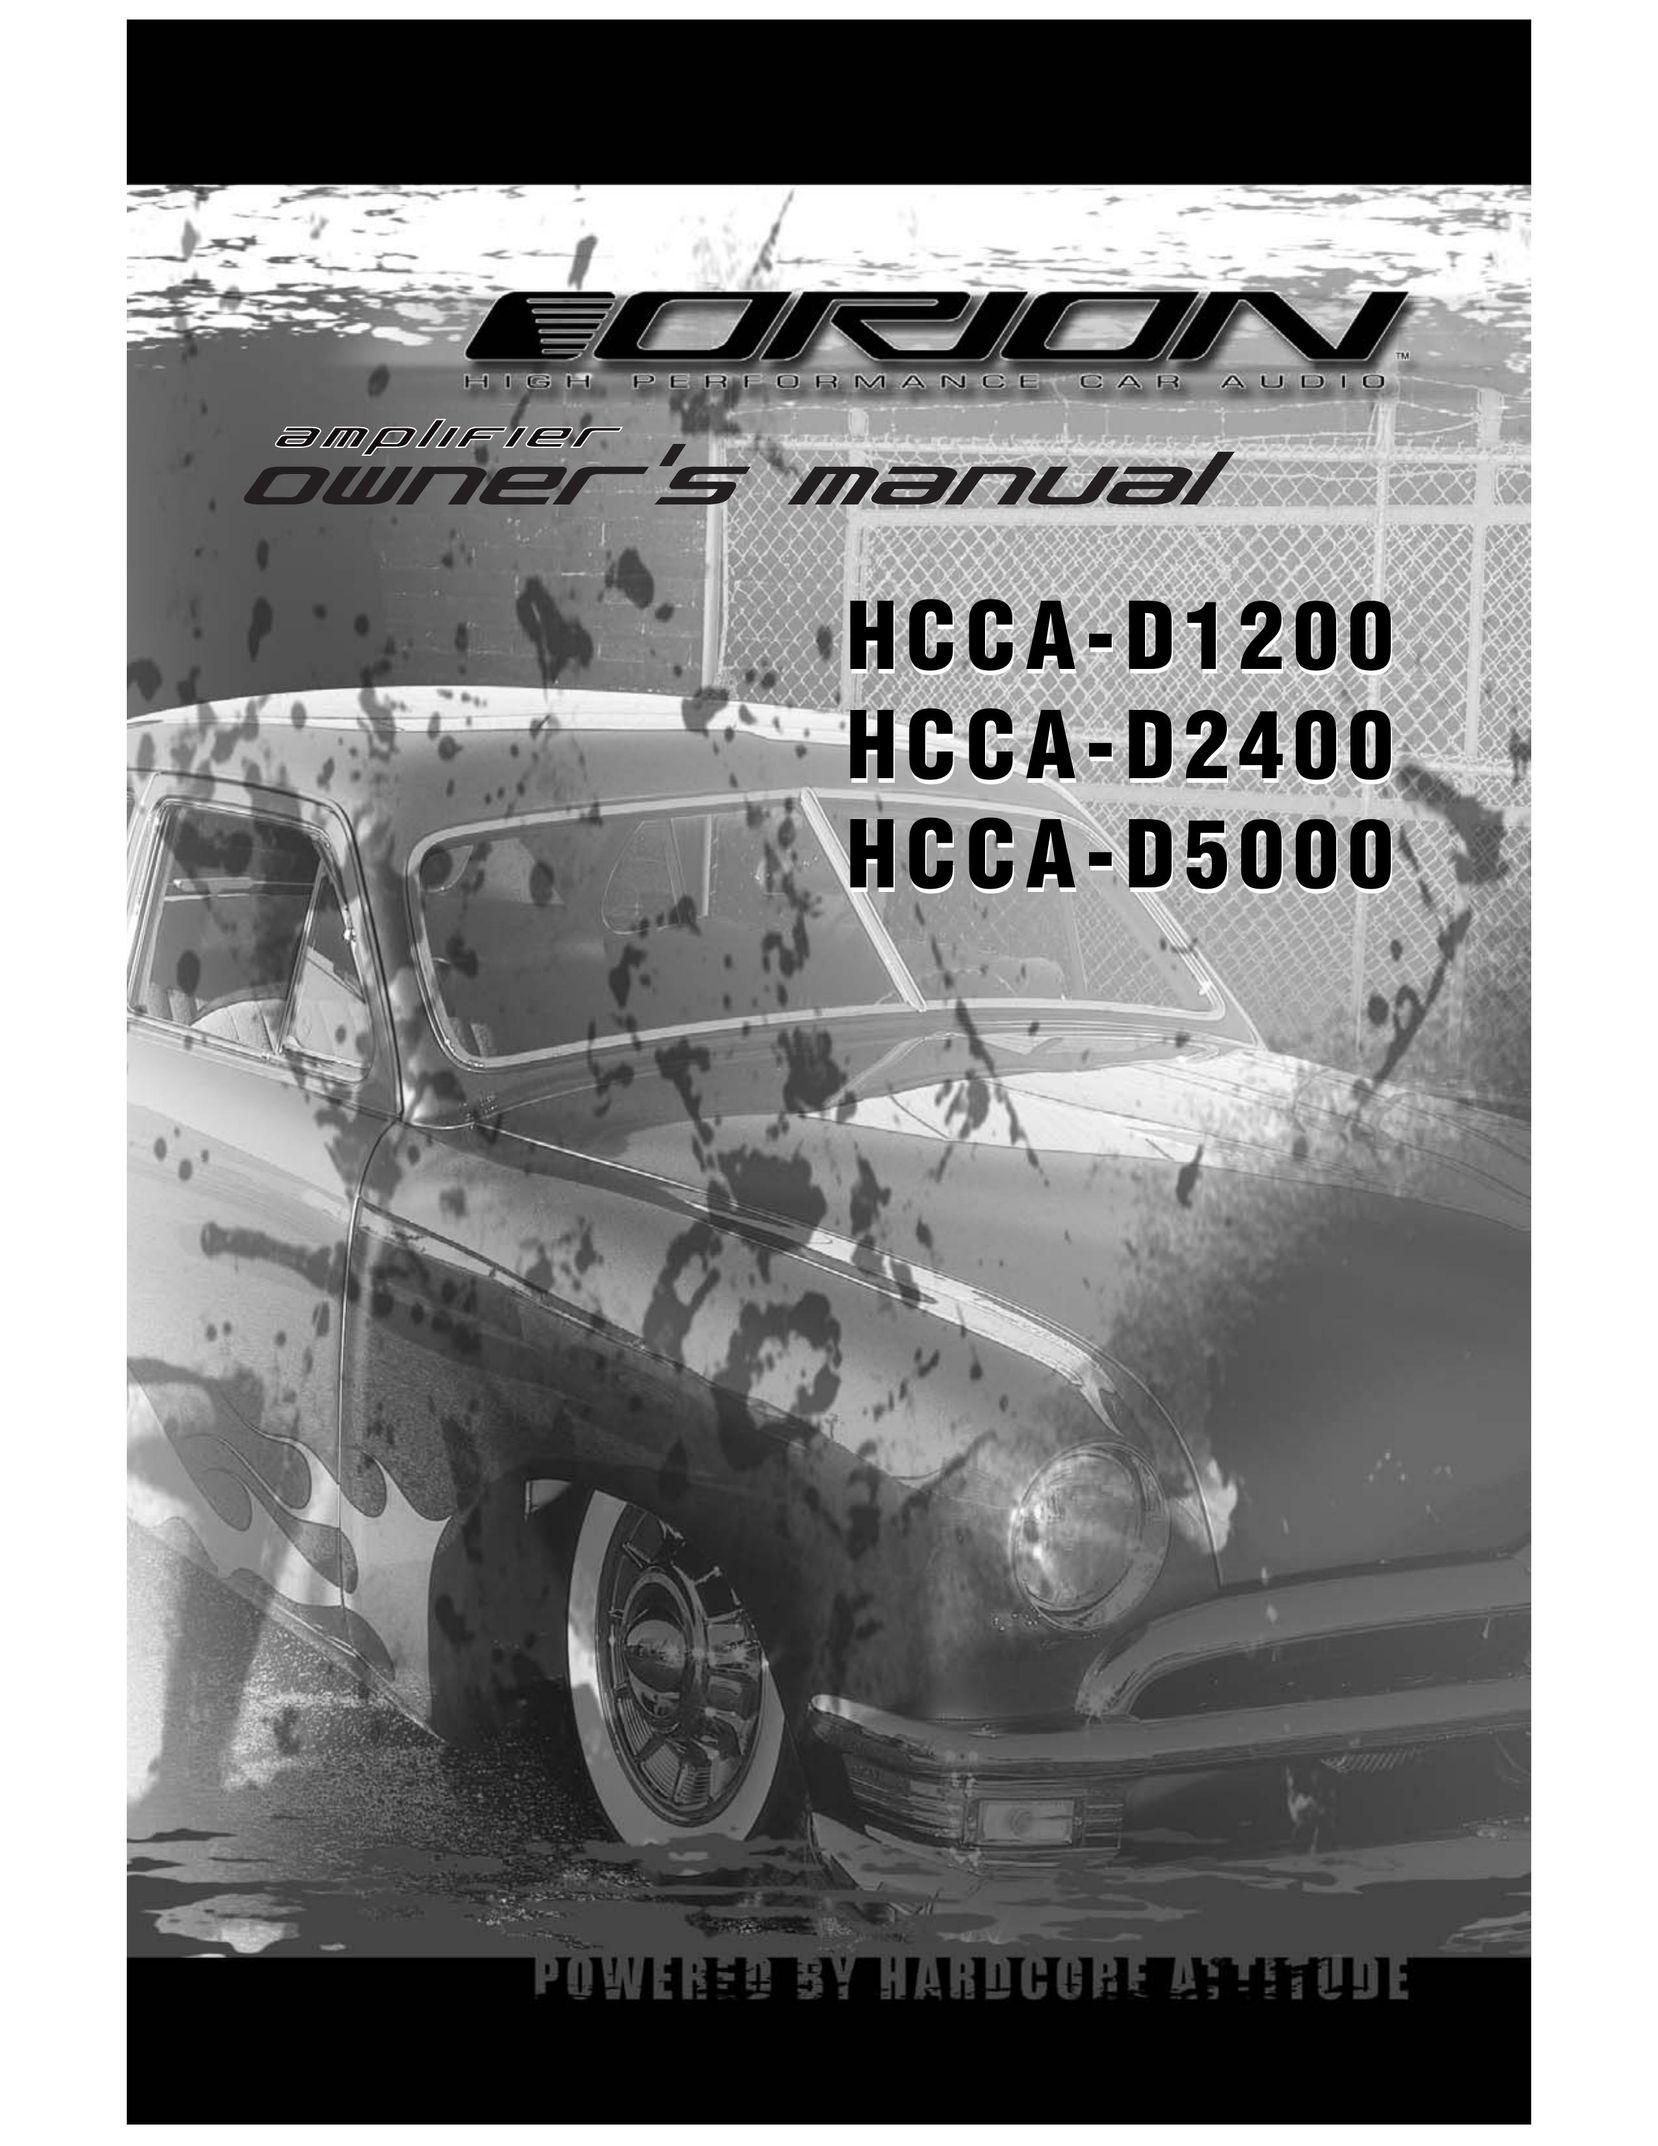 Orion Car Audio HCCA-D1200, HCCA-D2400, HCCA-D5000 Car Amplifier User Manual